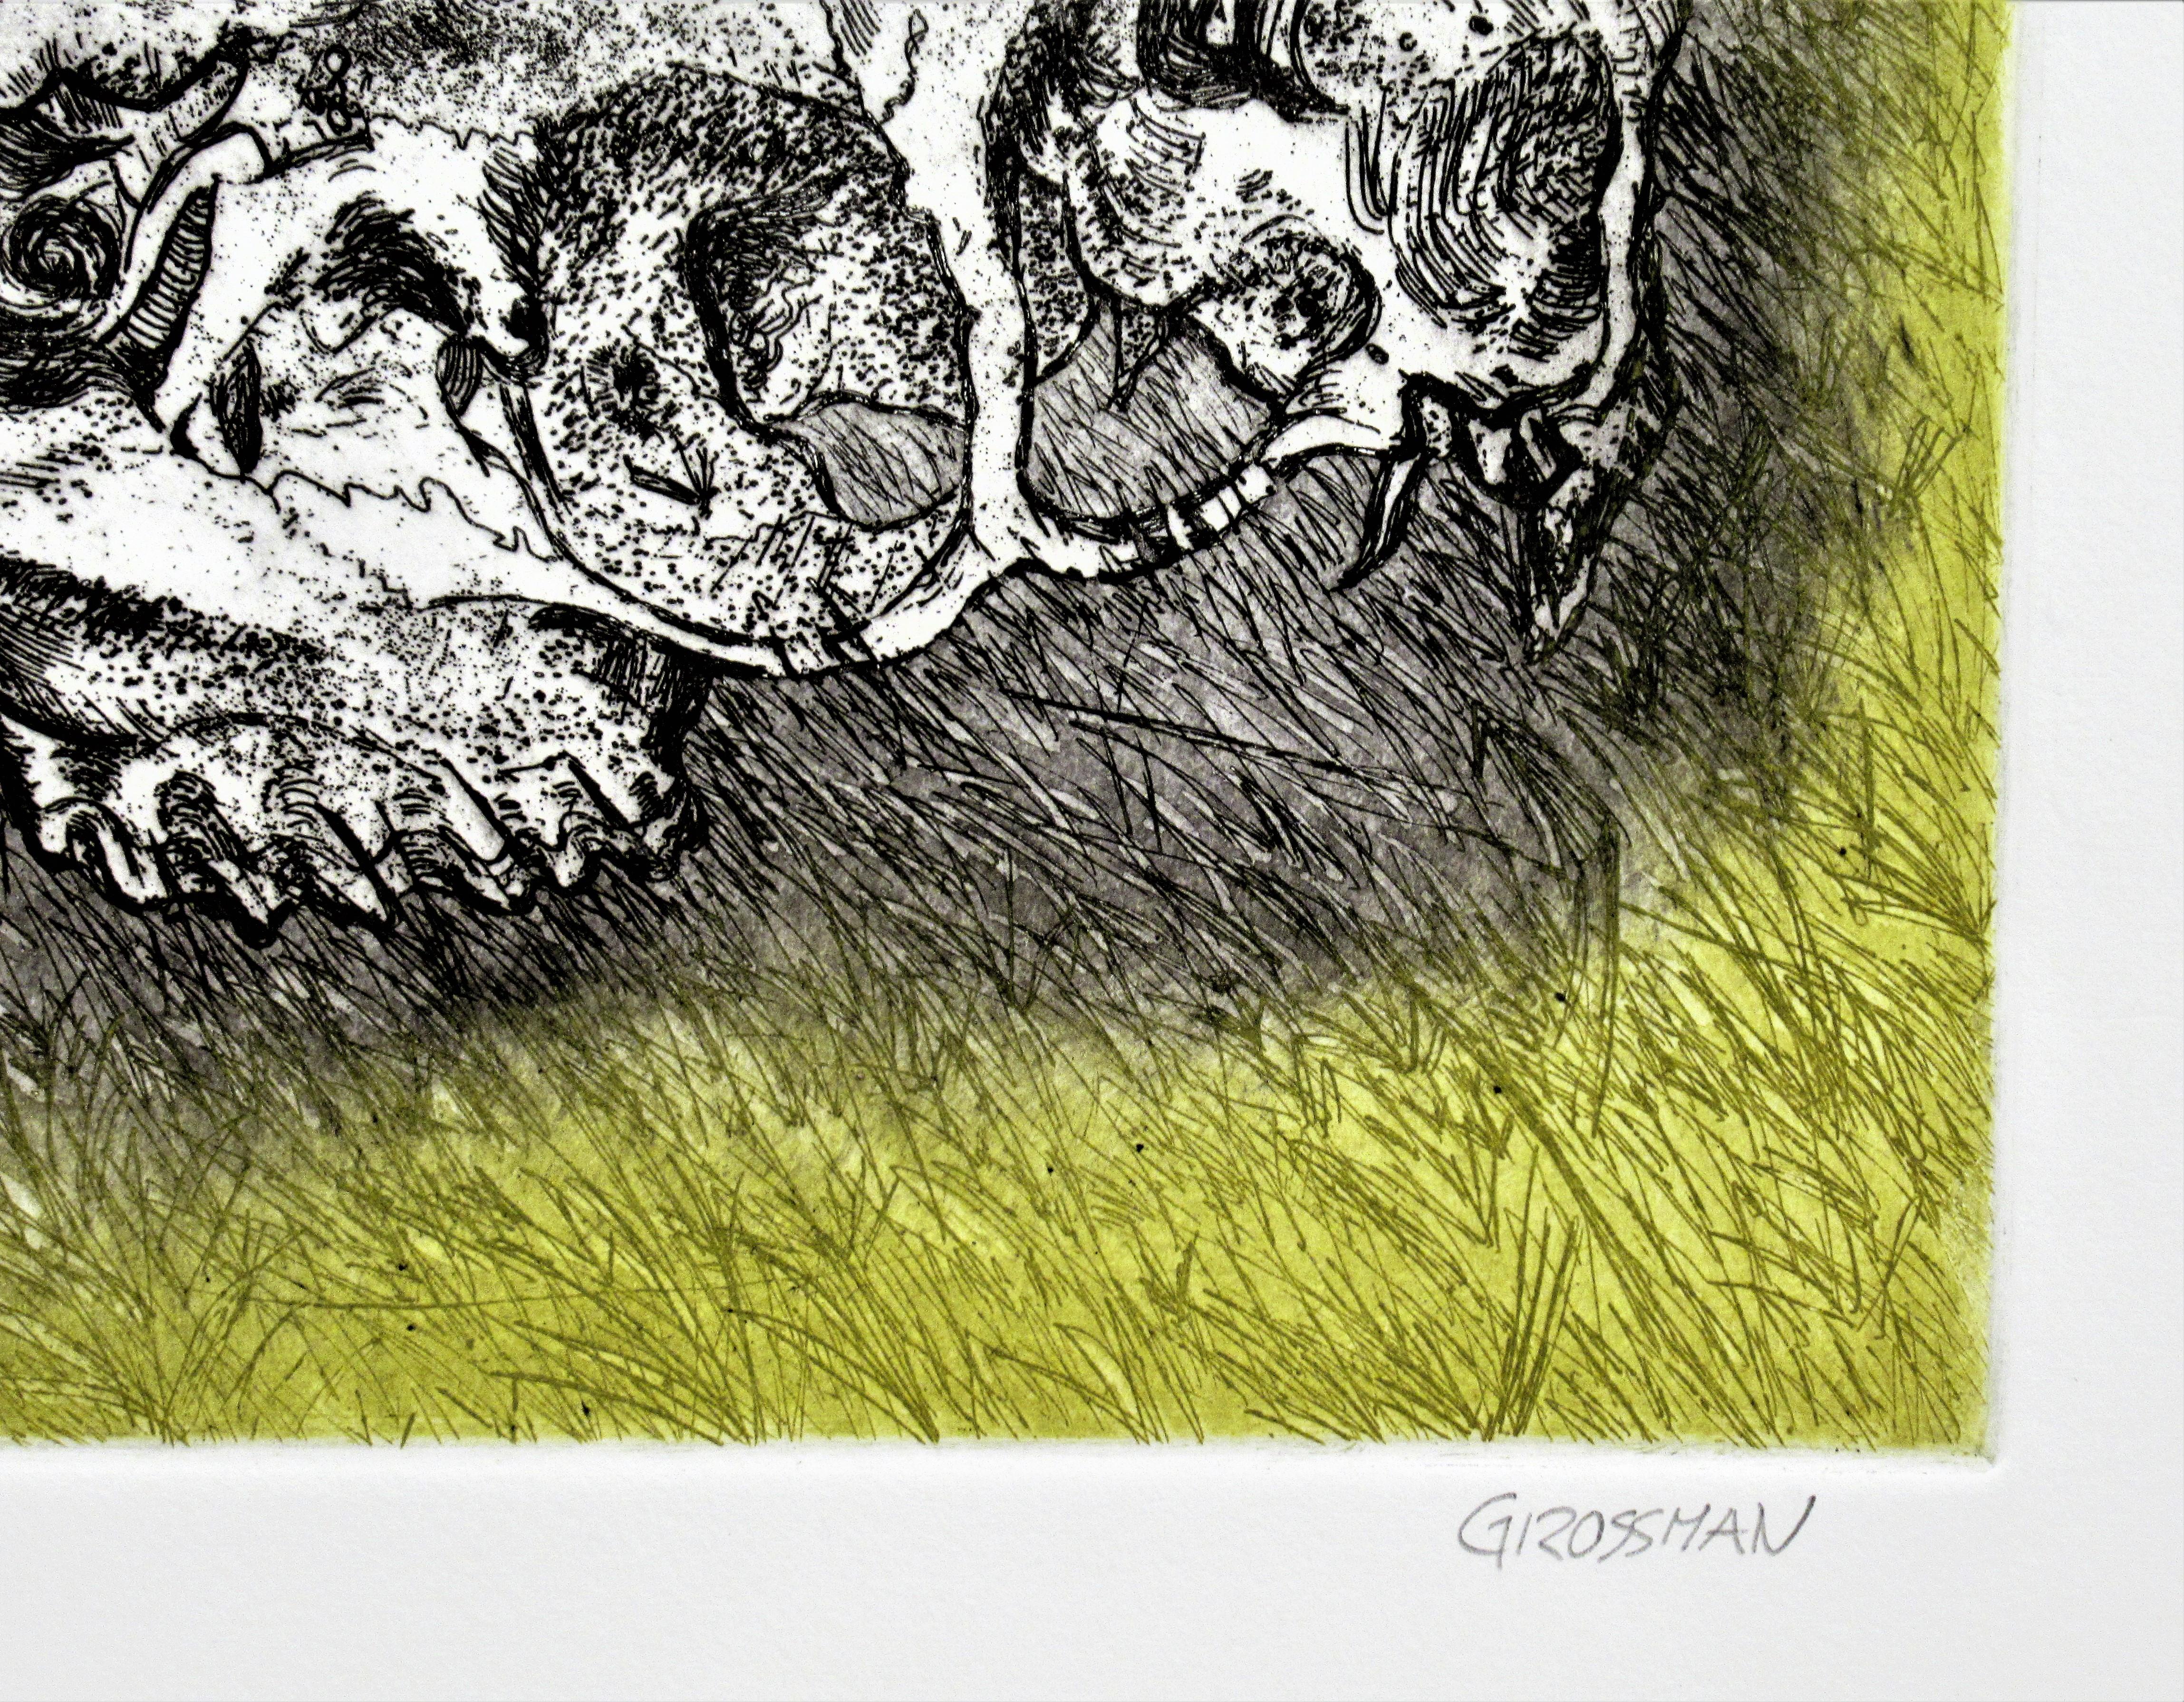 Skull - Gray Animal Print by Arnold A. Grossman